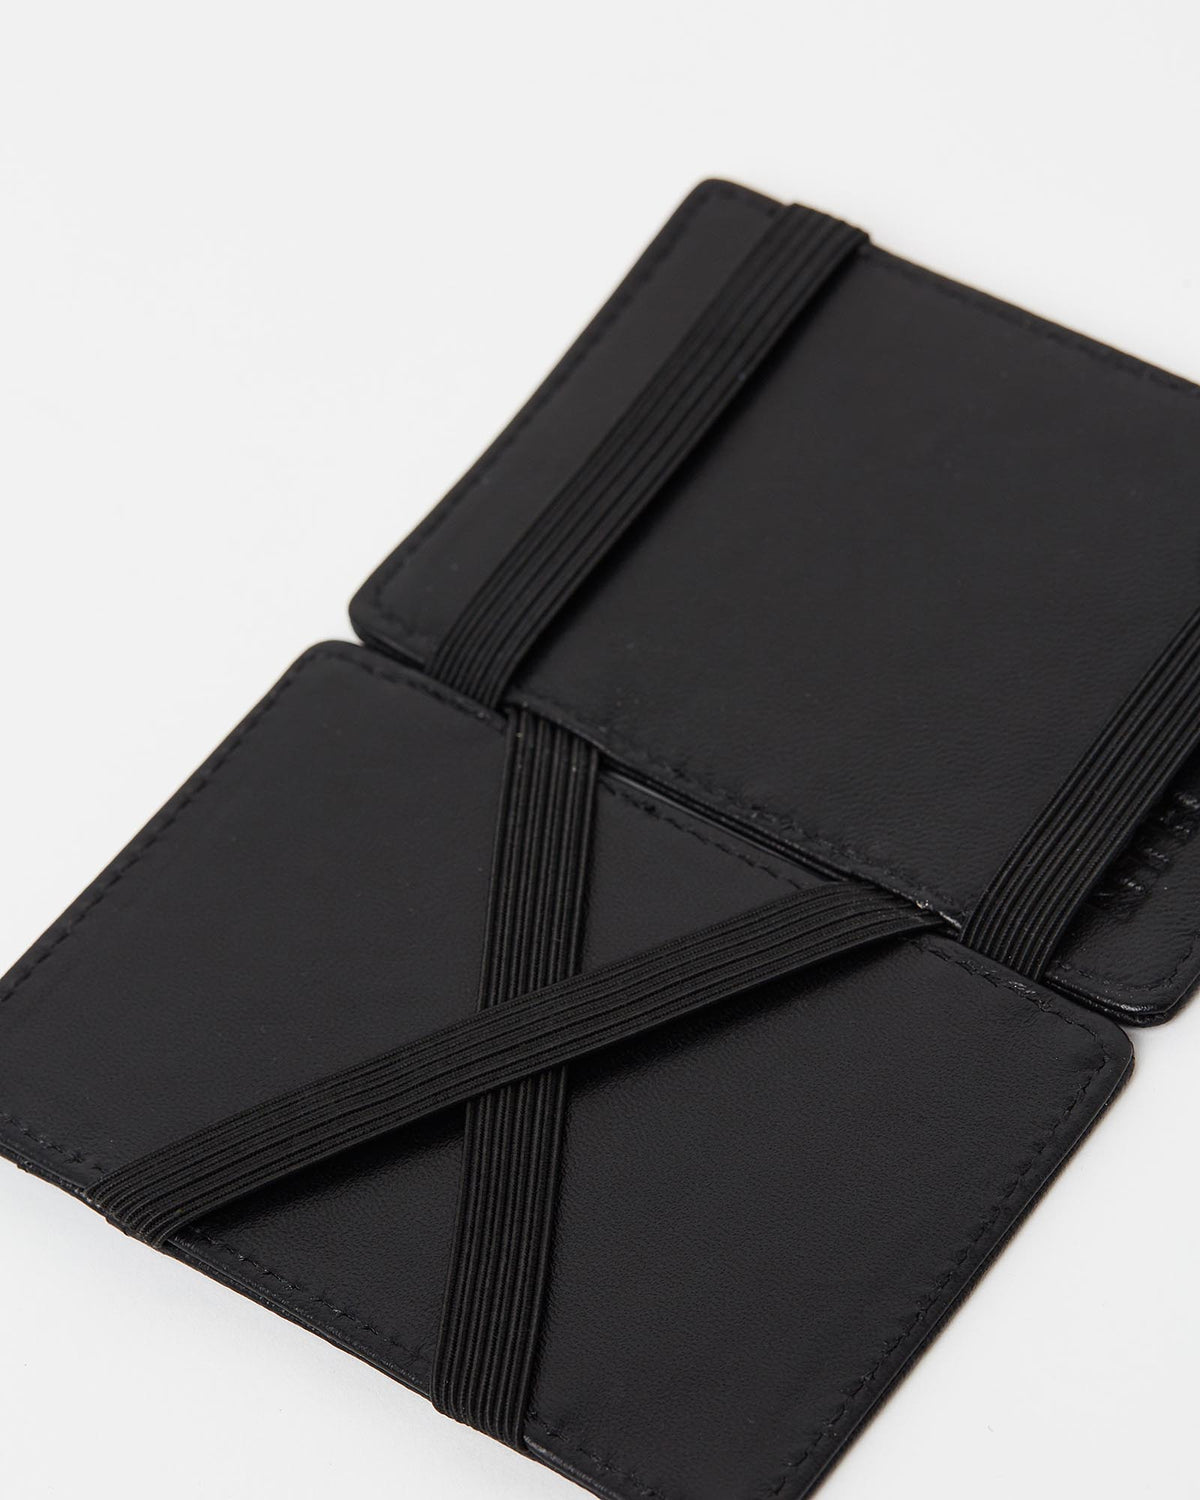 The Warrior Wallet Leather Black - FINAL SALE